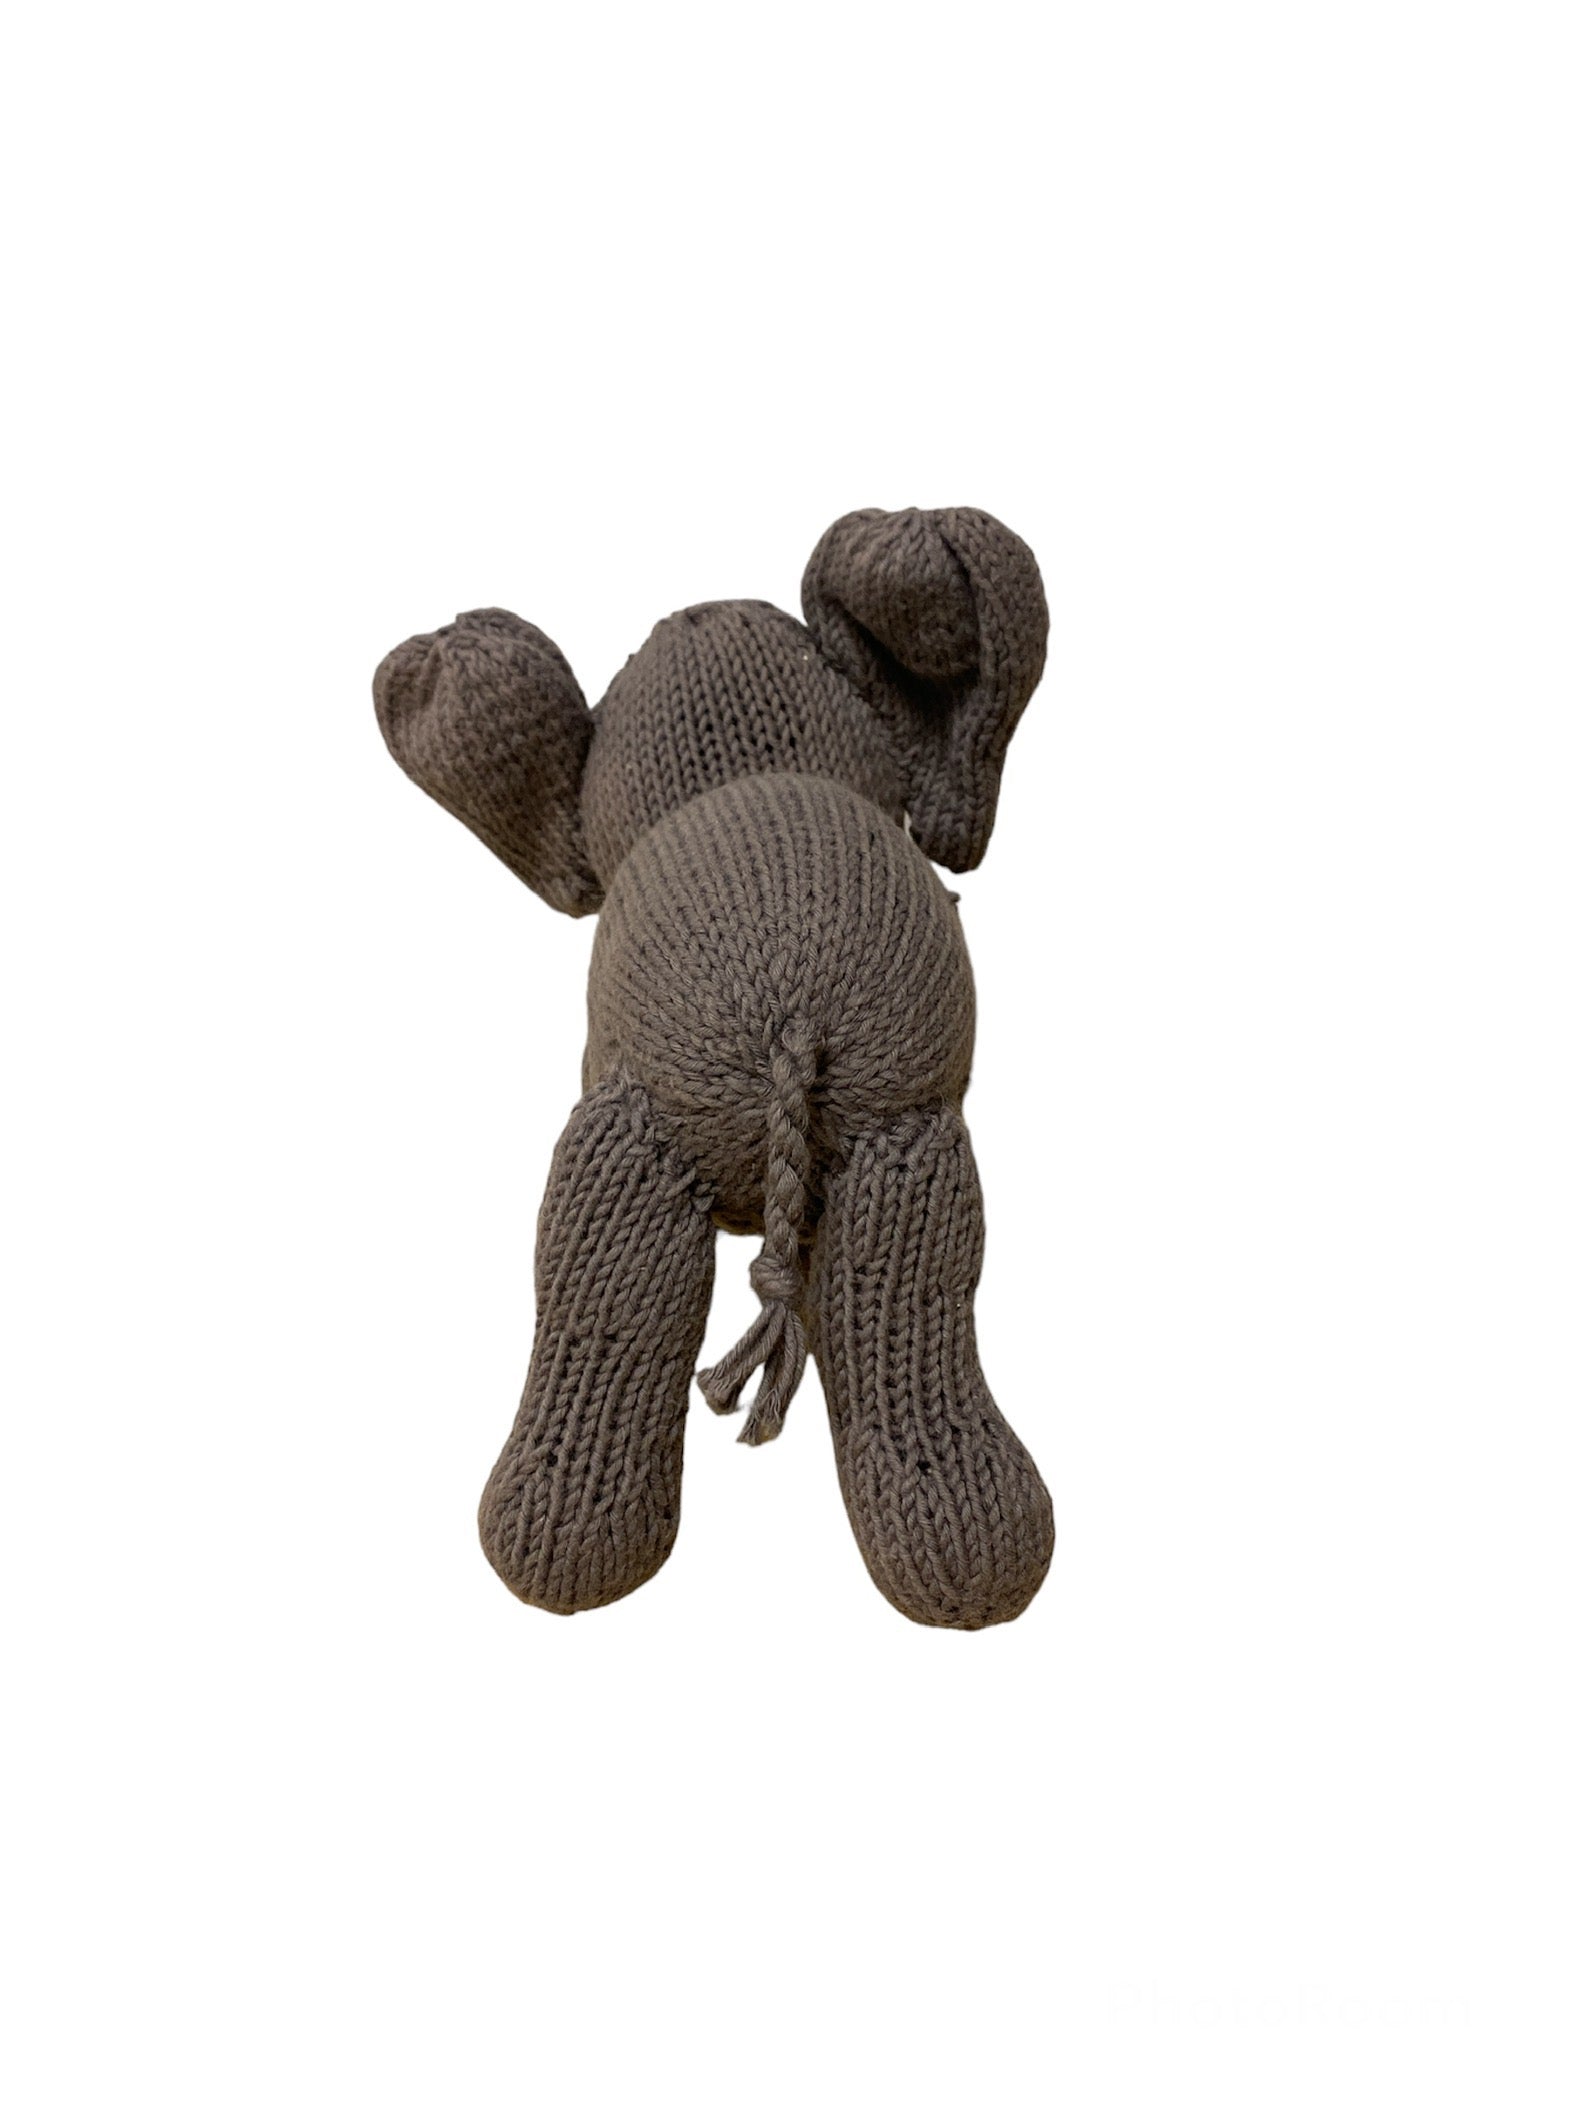 Hand Knitted Elephant - Medium